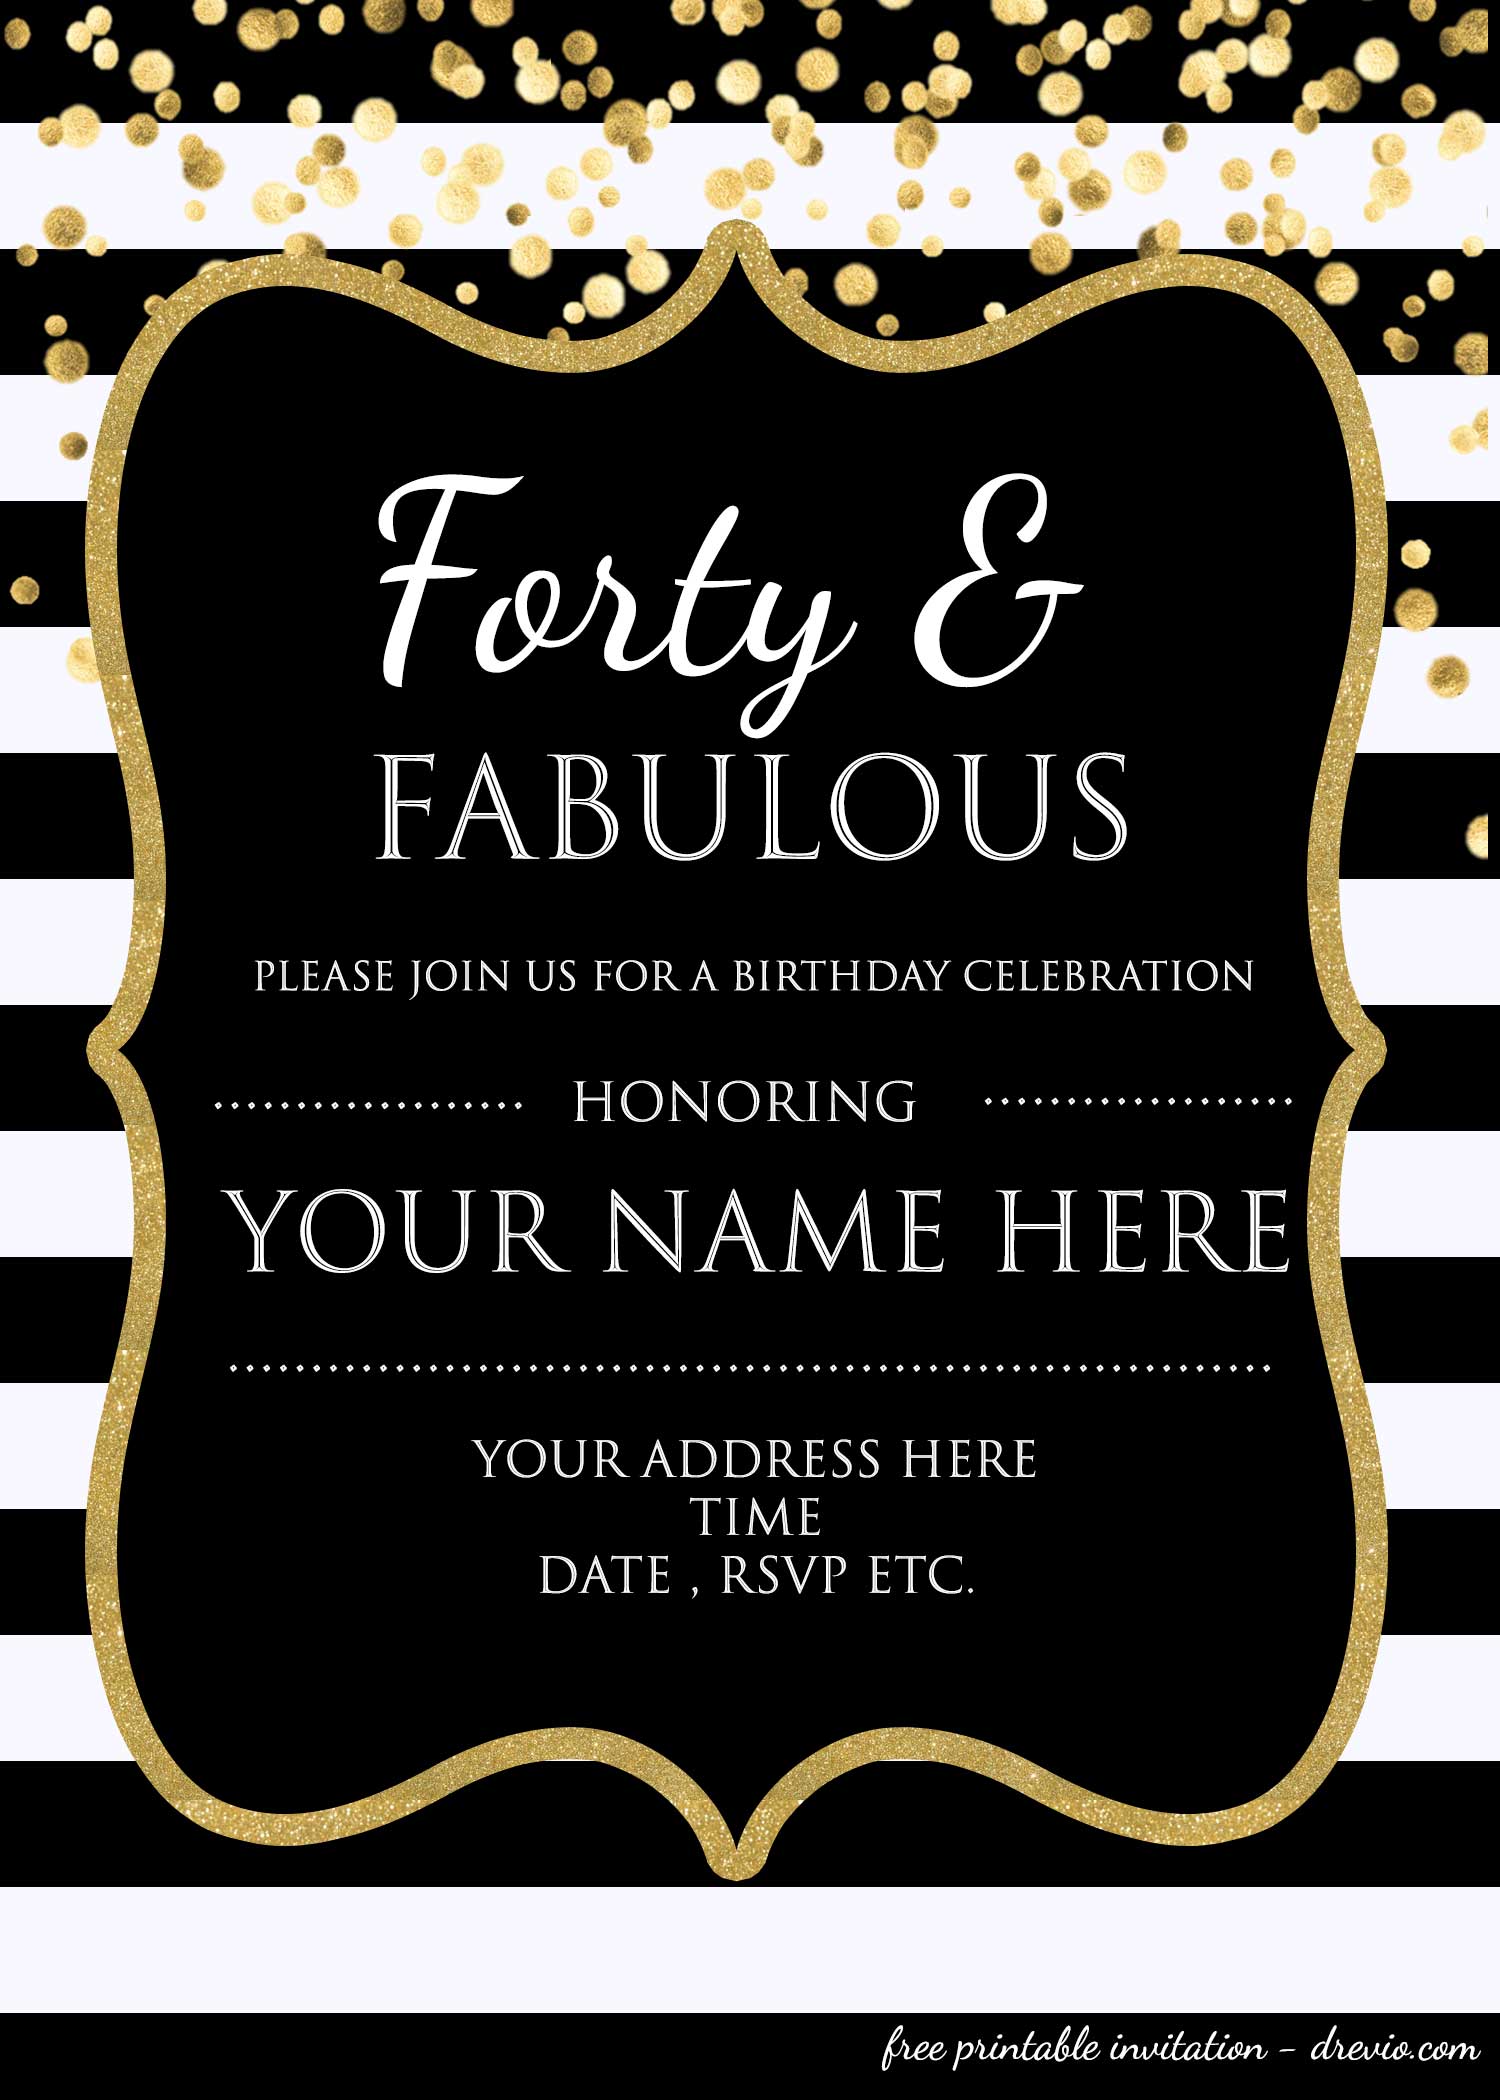 birthday invitation card template free download